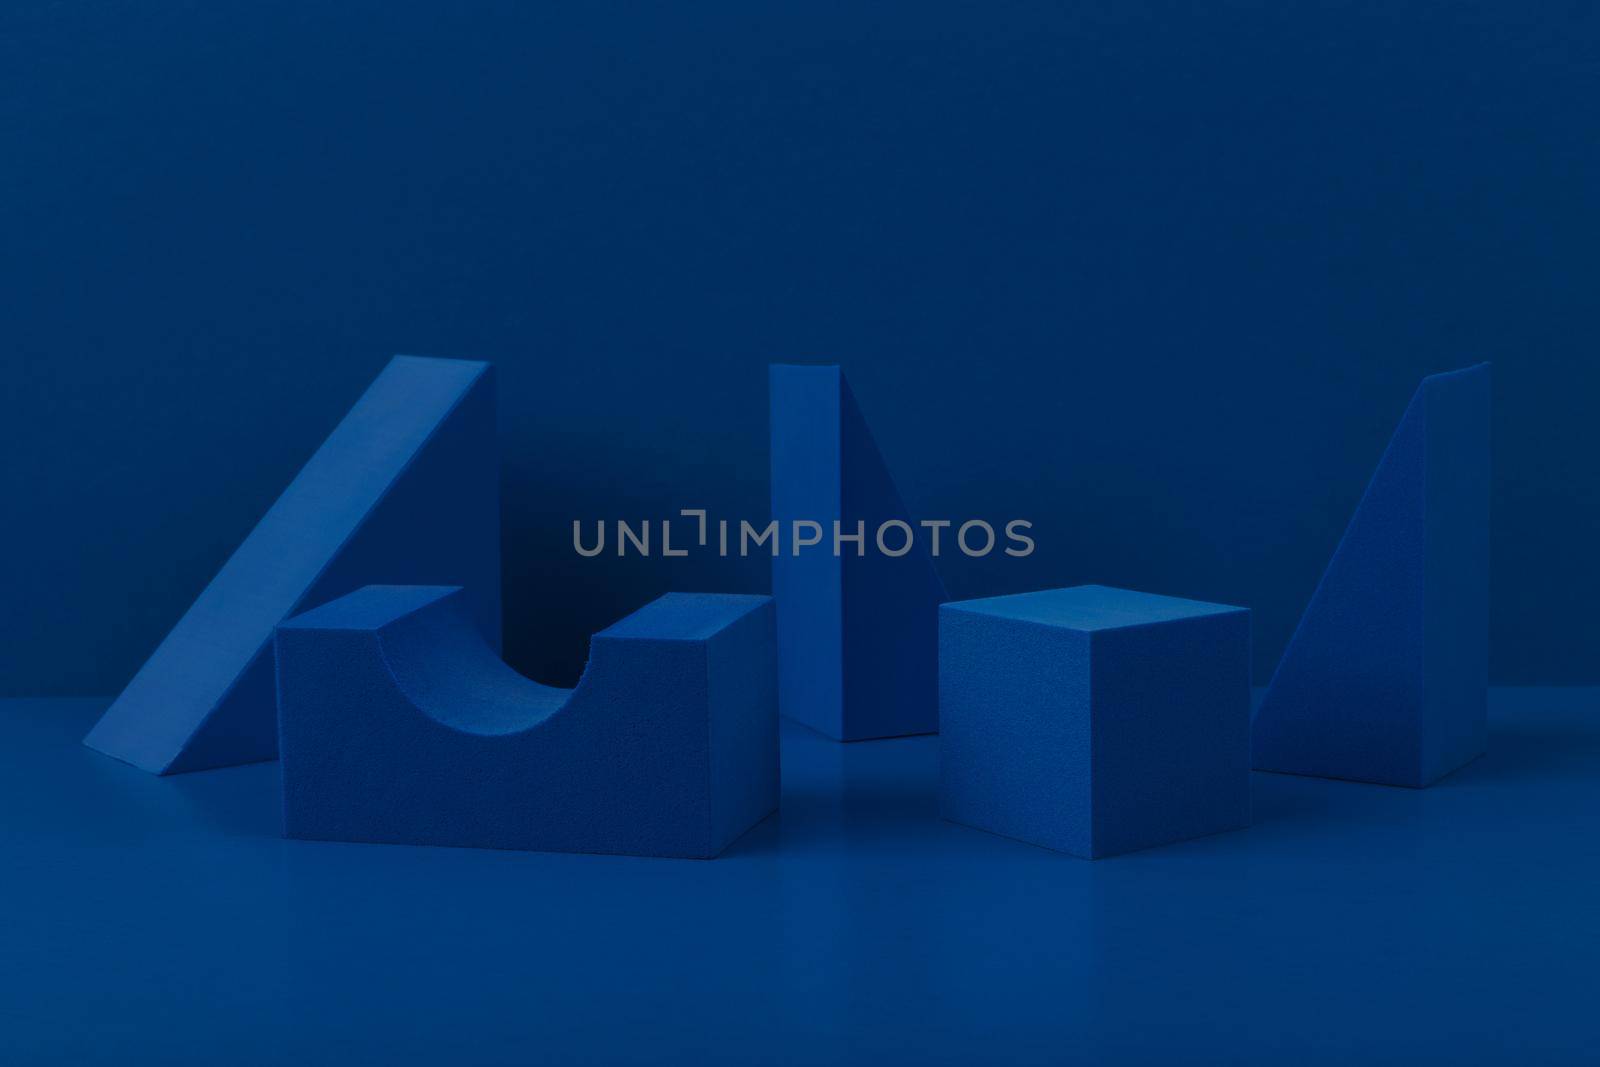 Monochromatic abstract geometric composition with blue geometric figures on blue background by Senorina_Irina